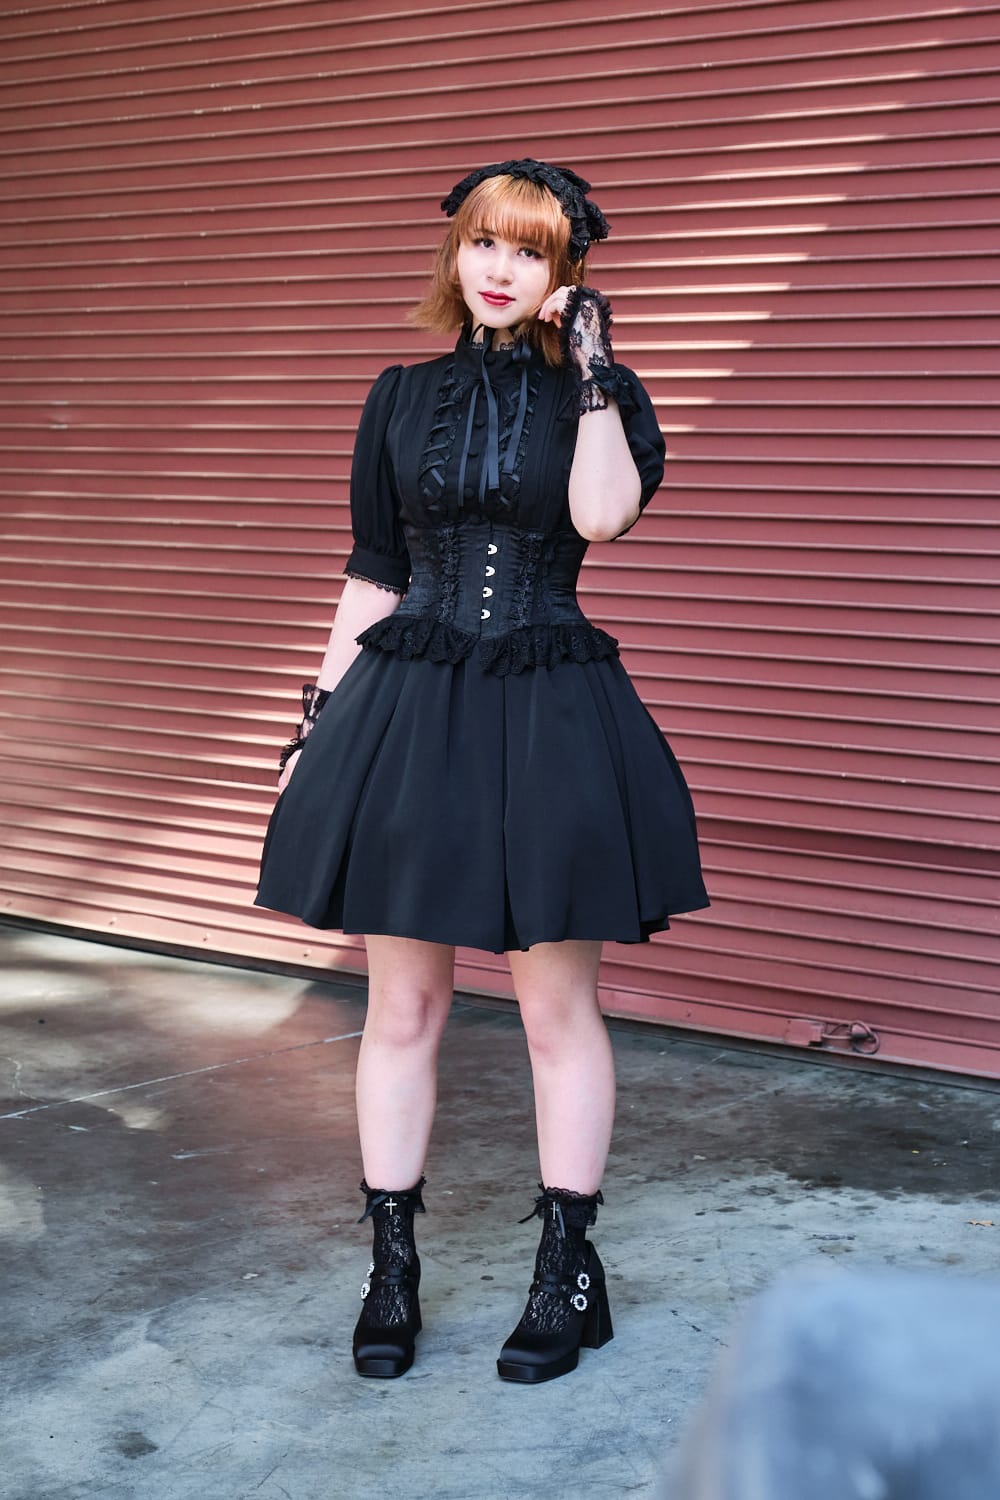 Atelier Pierrot gothic lolita model wearing all black short sleeved dress with black corset - full body standing pose 5.